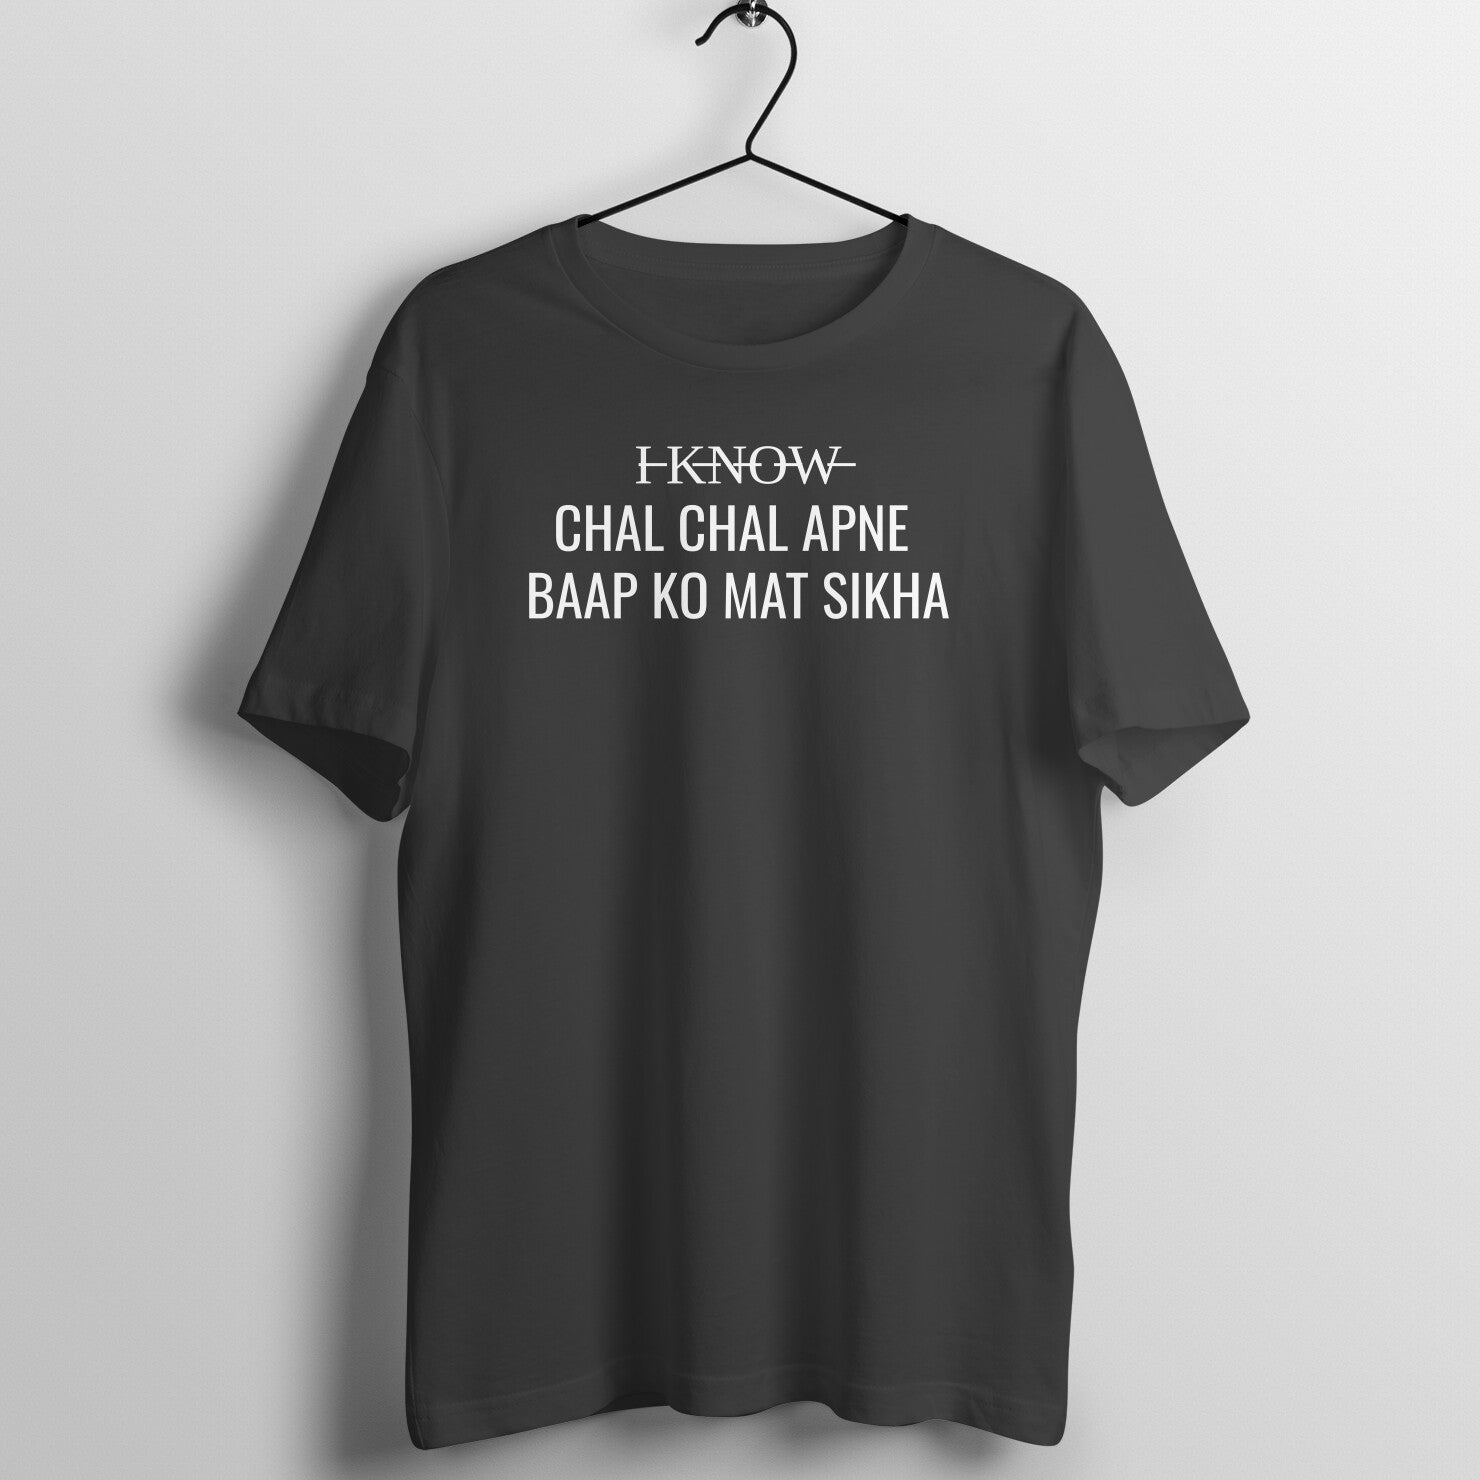 Chal Chal Apne Baap Ko Mat Sikha Funny Black T Shirt for Men and Women